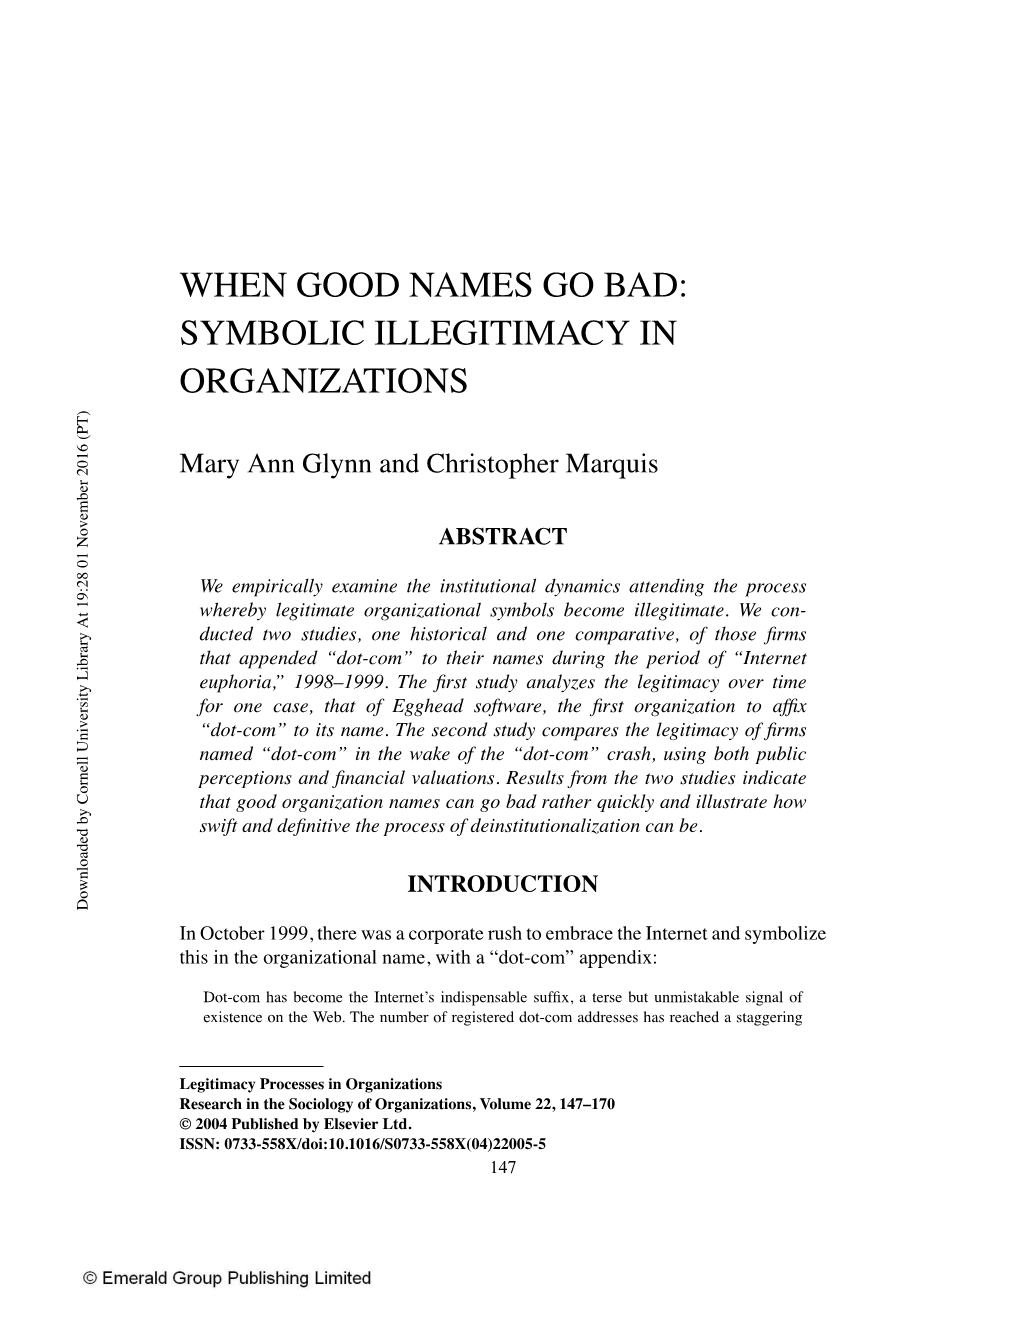 When Good Names Go Bad: Symbolic Illegitimacy in Organizations